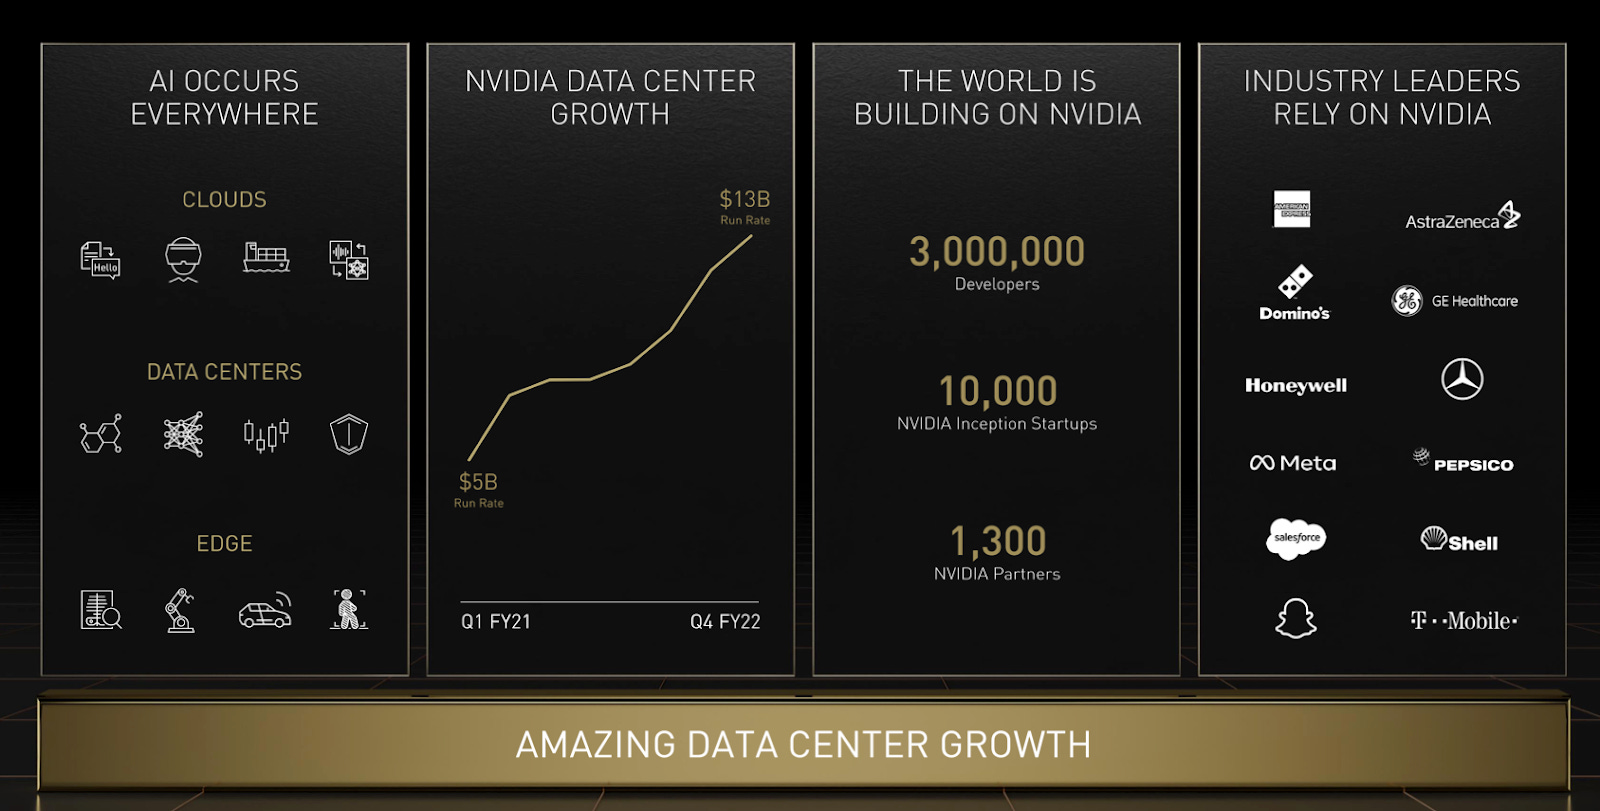 Nvidia AI Data Center Progress  - Source: Nvidia Investor Day 2022 Presentation